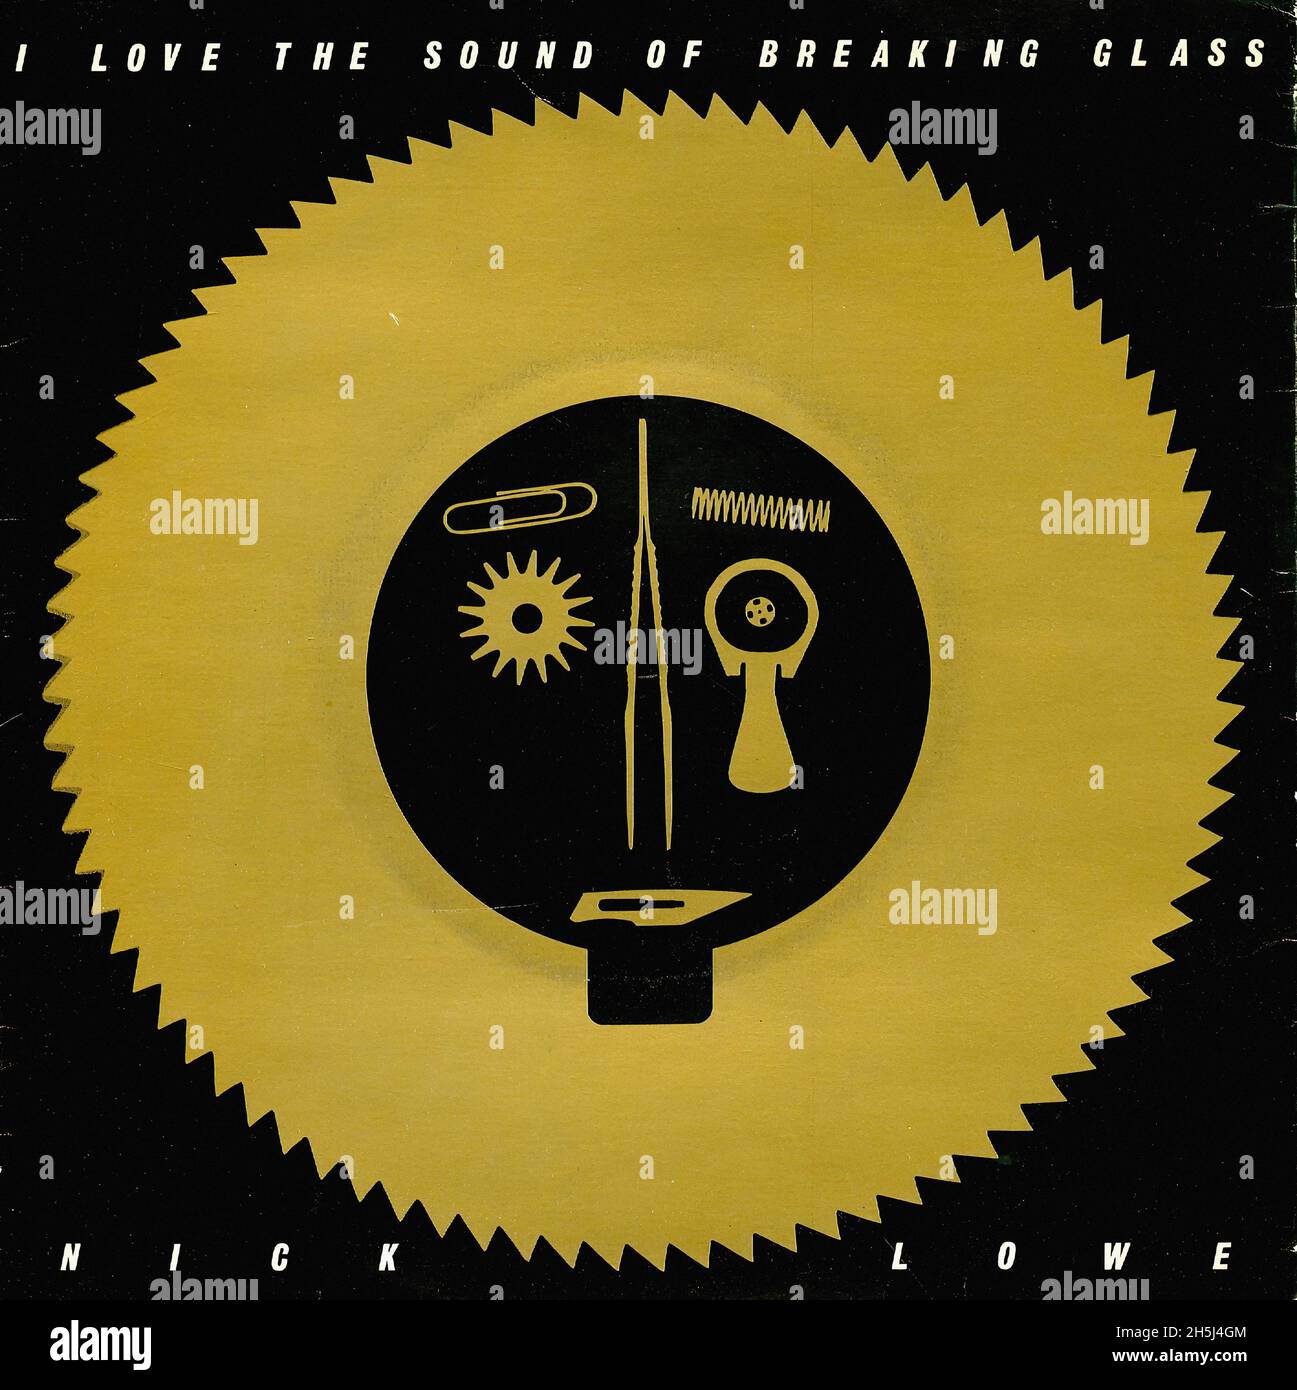 Nick Lowe - I Love The Sound of Breaking Glass - Vintage vinyl album cover  Stock Photo - Alamy